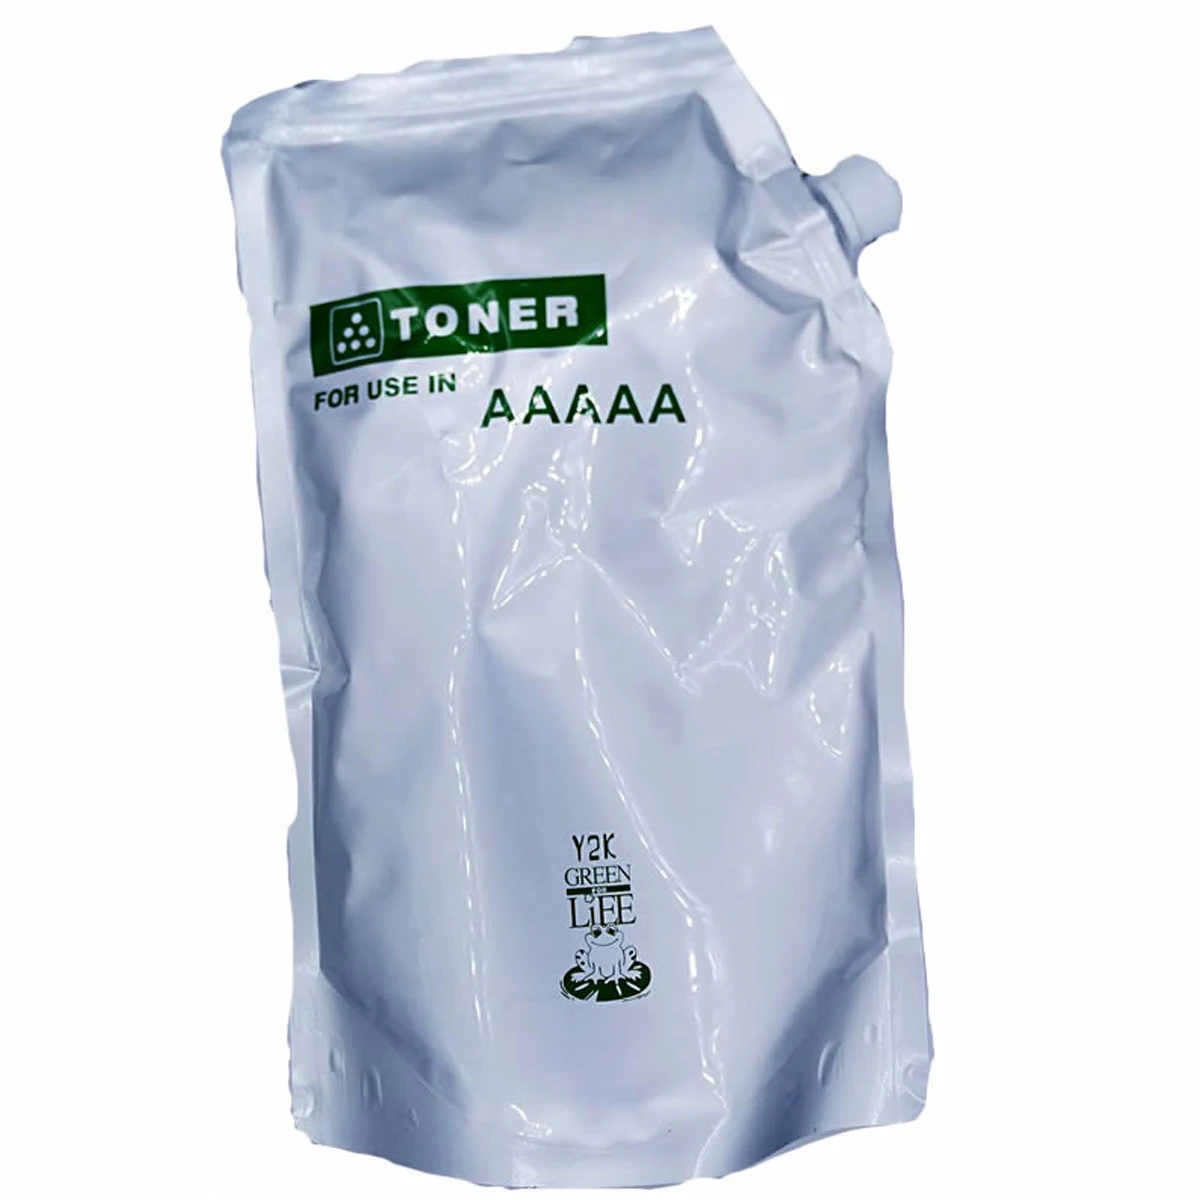 

1KG/Bag Toner Powder Refill Kits For Fuji Xerox Phaser 3020 3021 3115 WorkCentre 3025 106R02773 106R2773 106R03048 106R03048